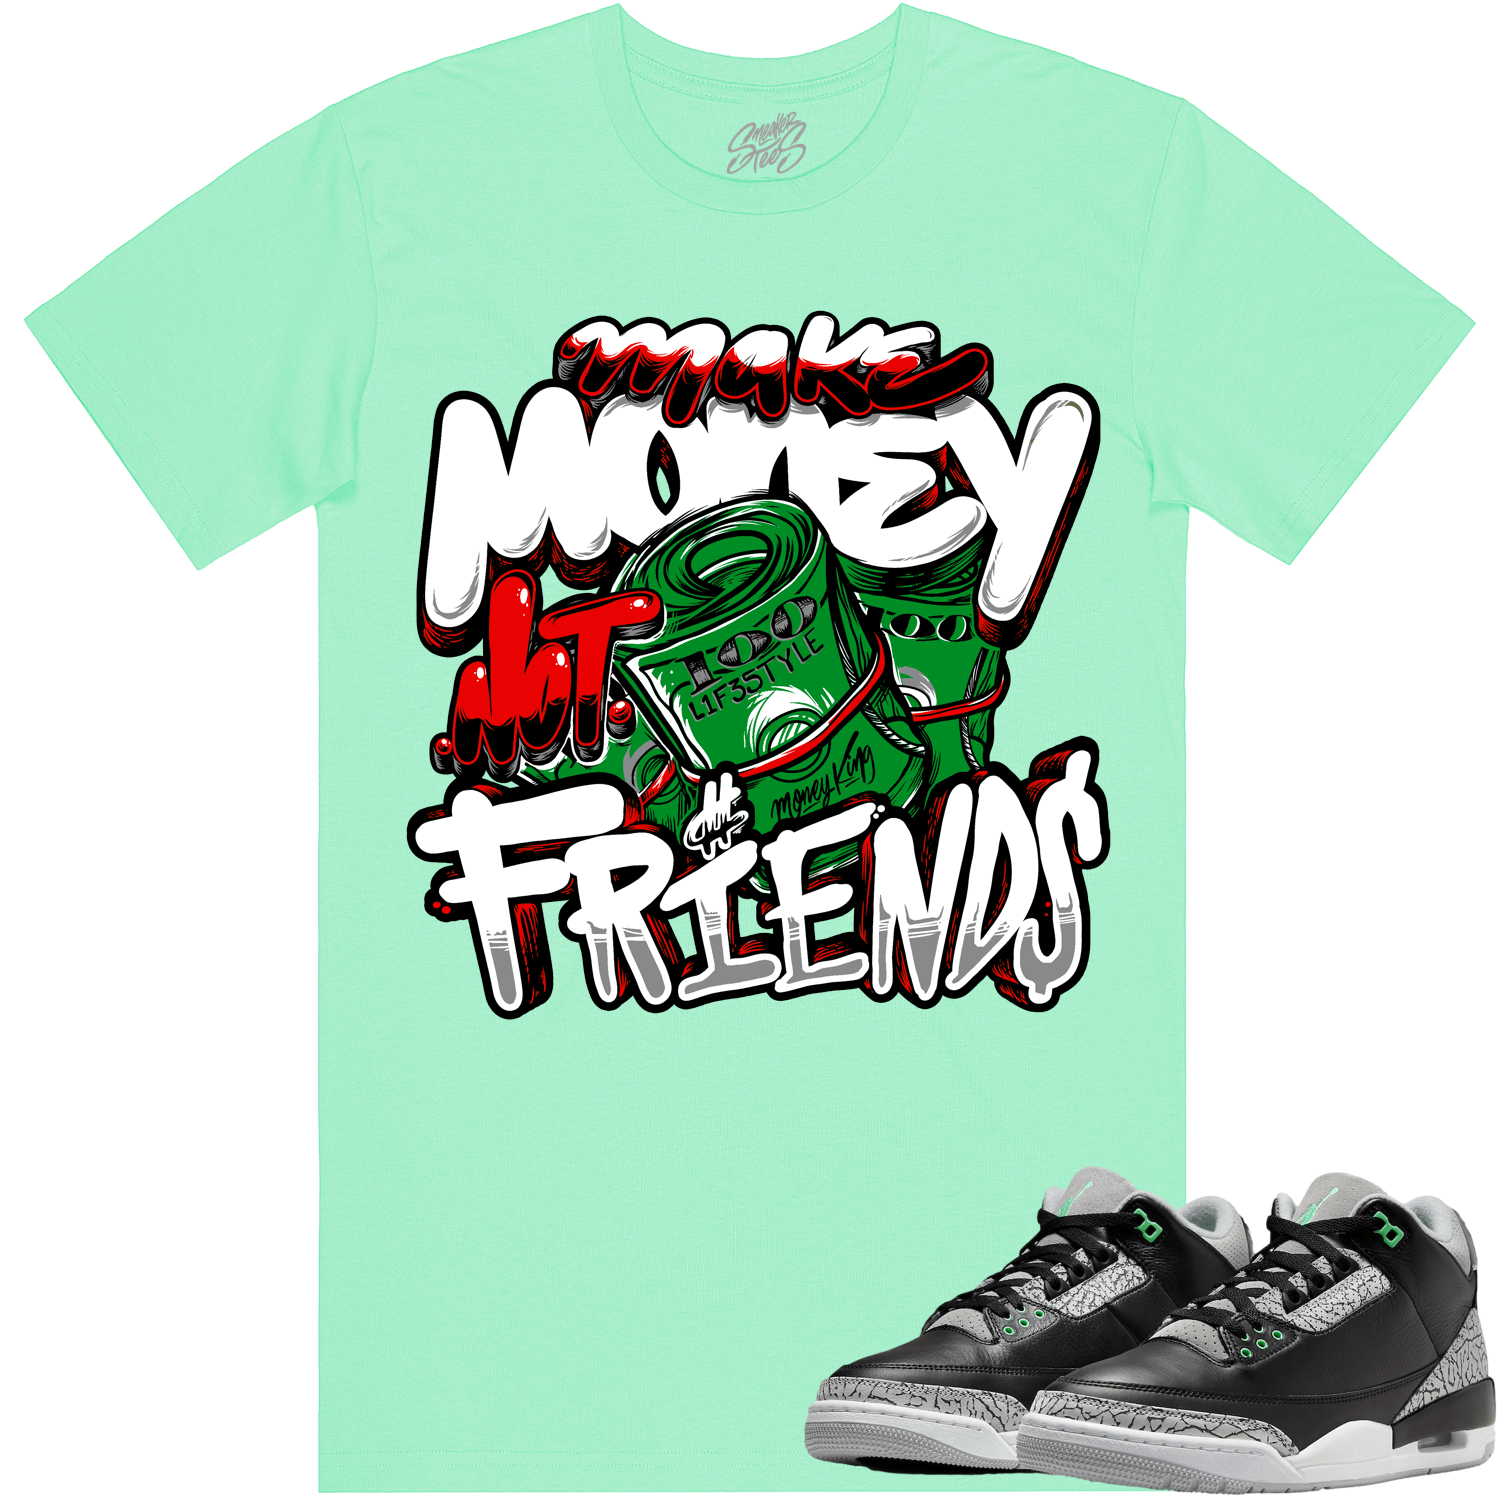 Green Glow 3s Shirts - Jordan Retro 3 Green Glow Shirts - Make Money